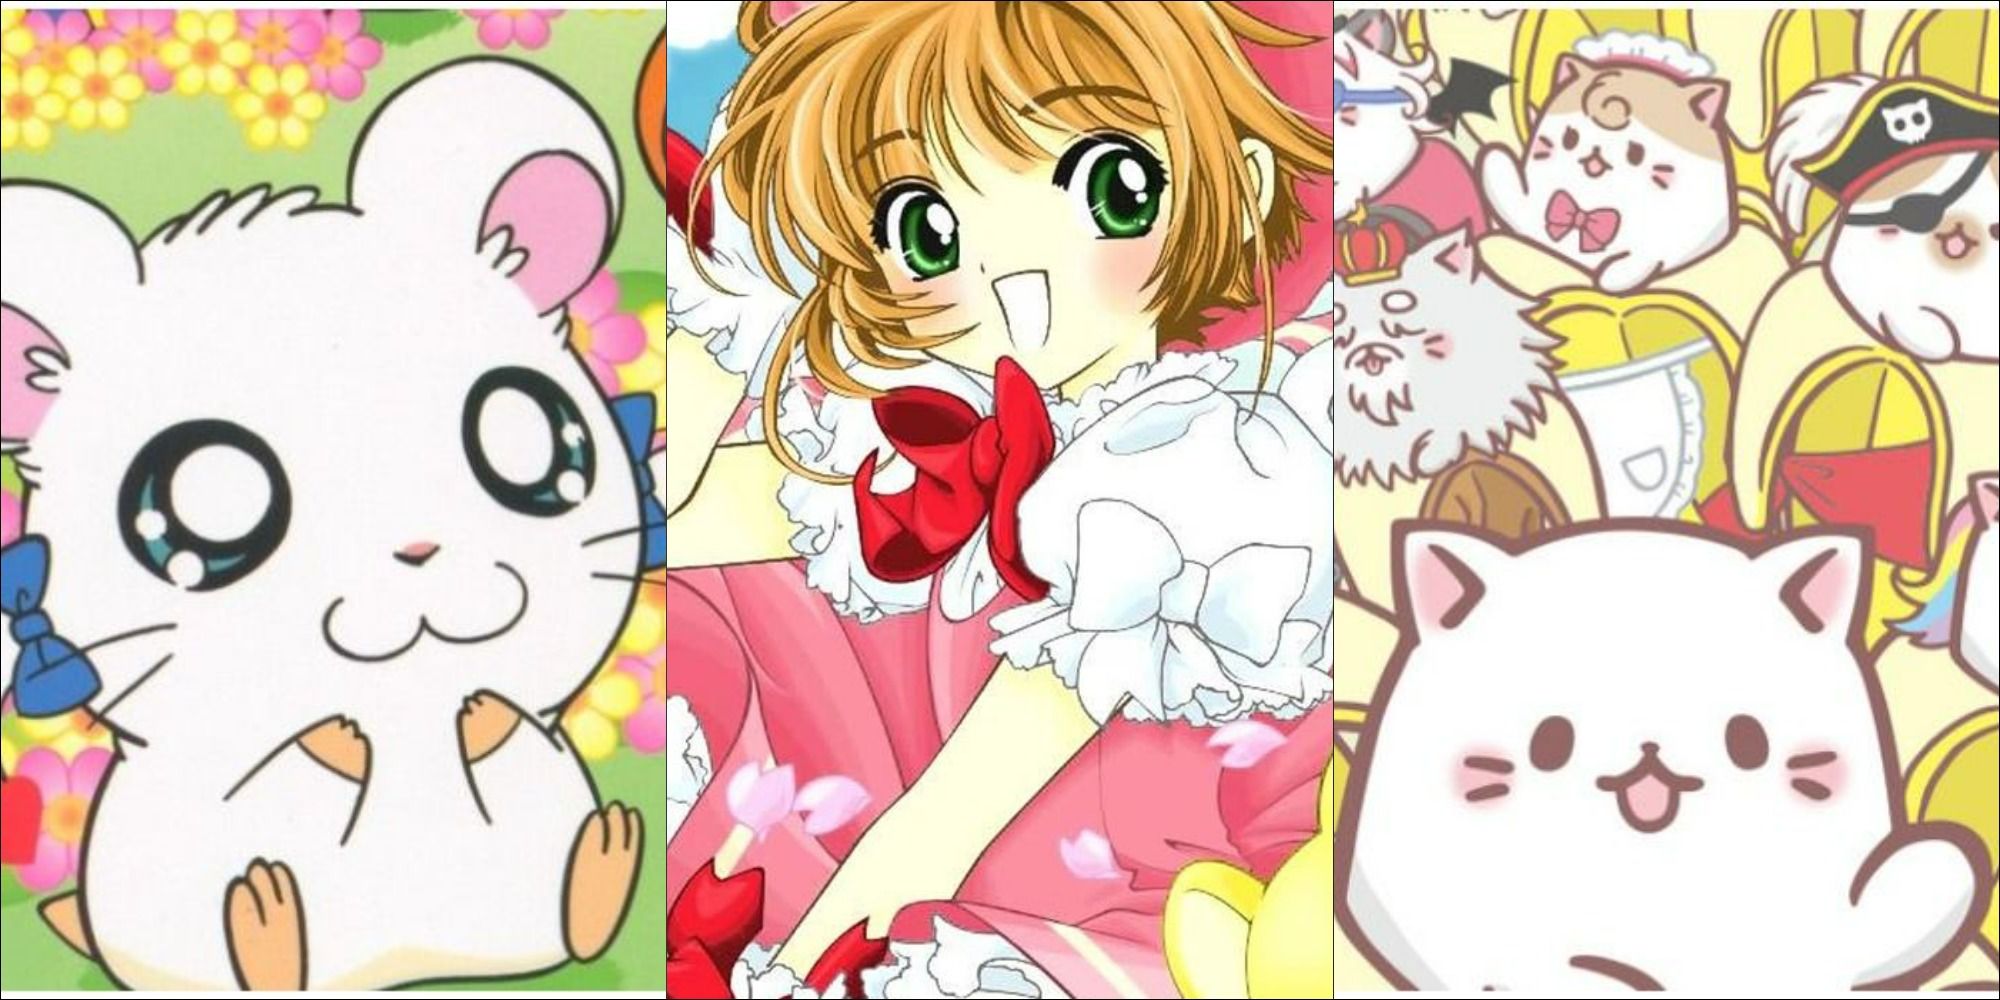 Characters from Hamtaro, Cardcaptor Sakura, and Banaya